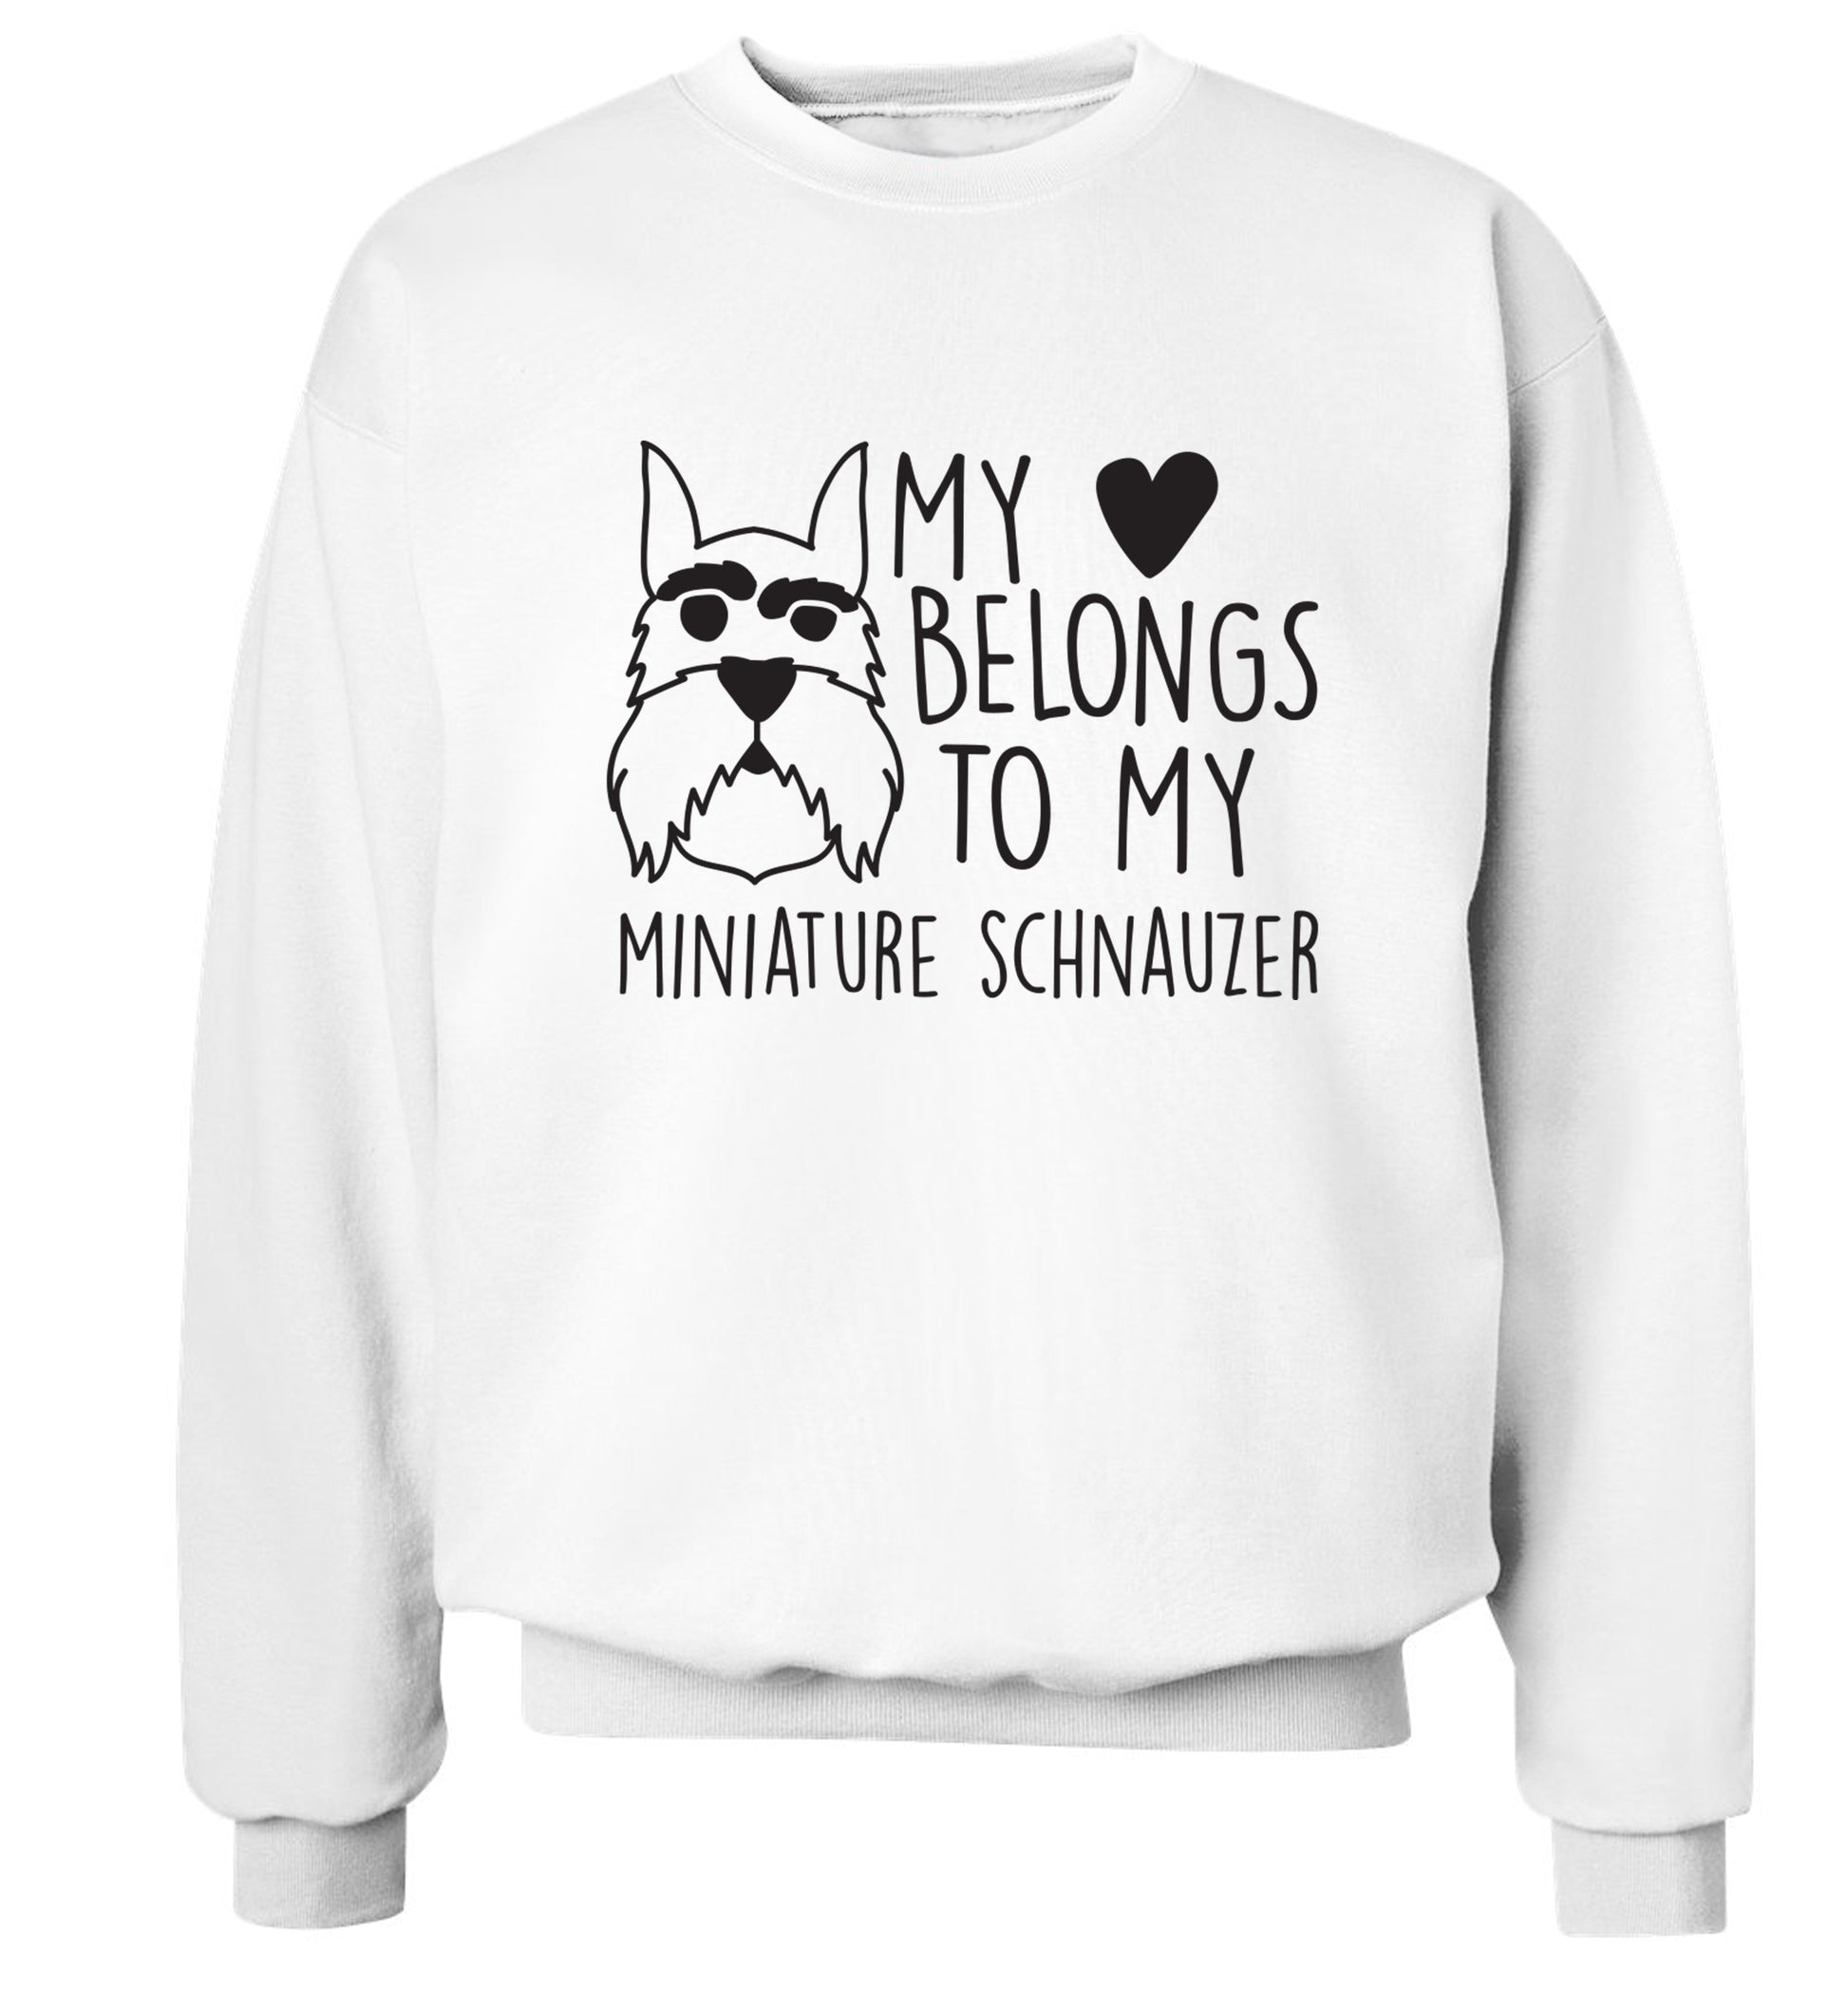 My heart belongs to my miniature schnauzer Adult's unisex white Sweater 2XL